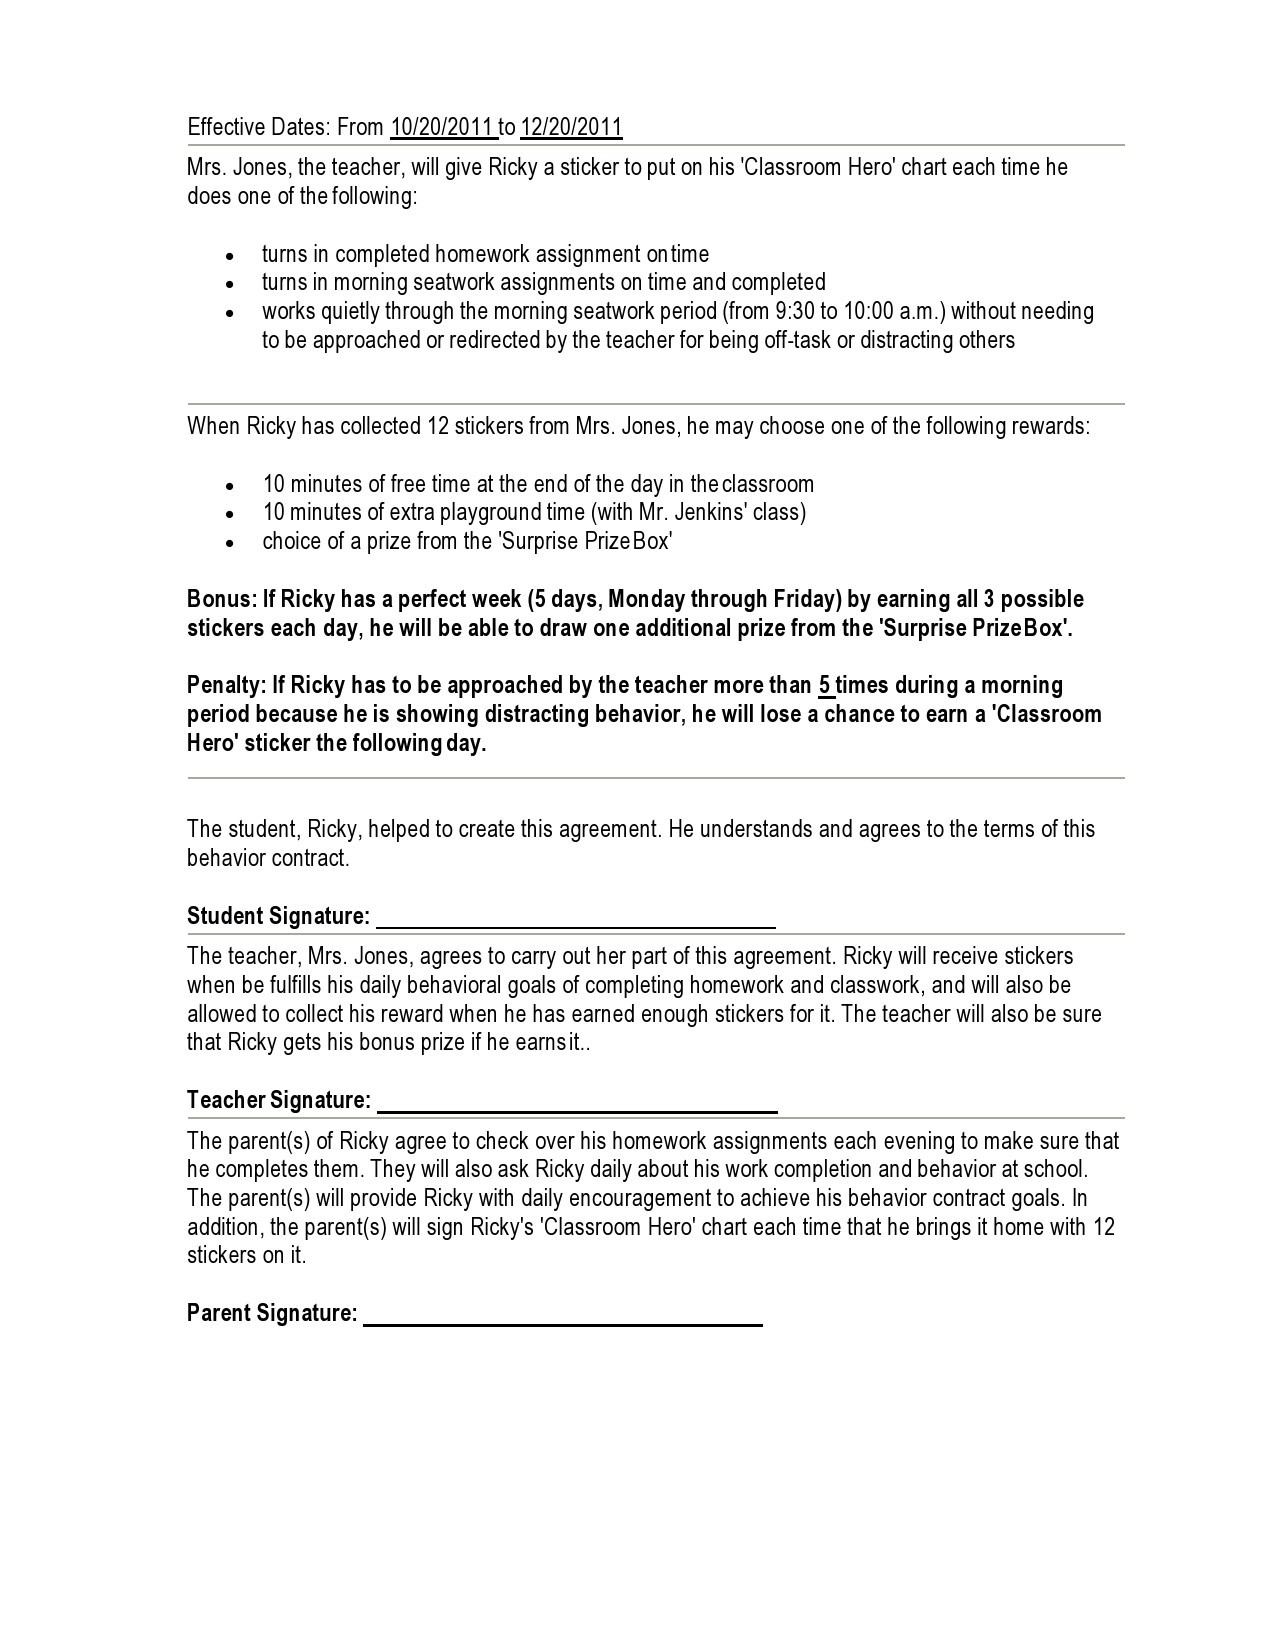 Free behavior contract template 10